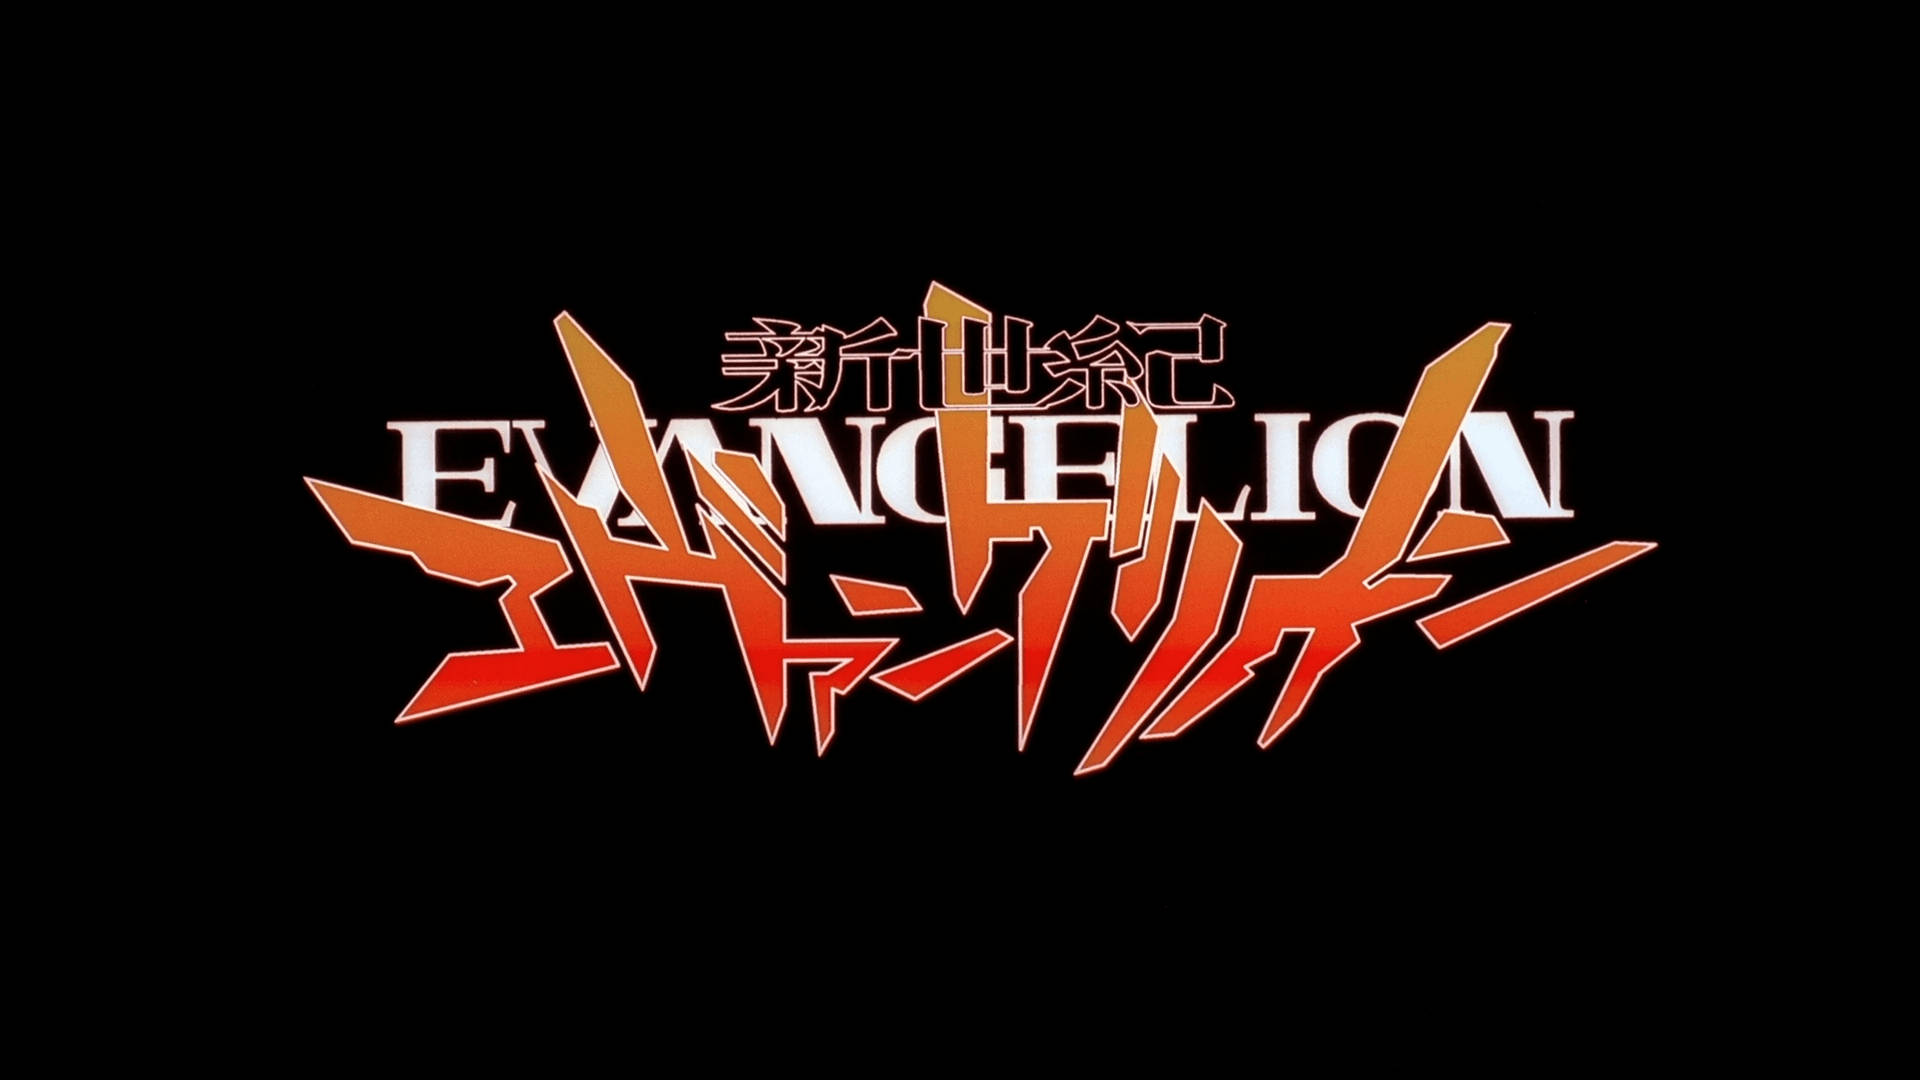 Neon Genesis Evangelion - An anime classic Wallpaper